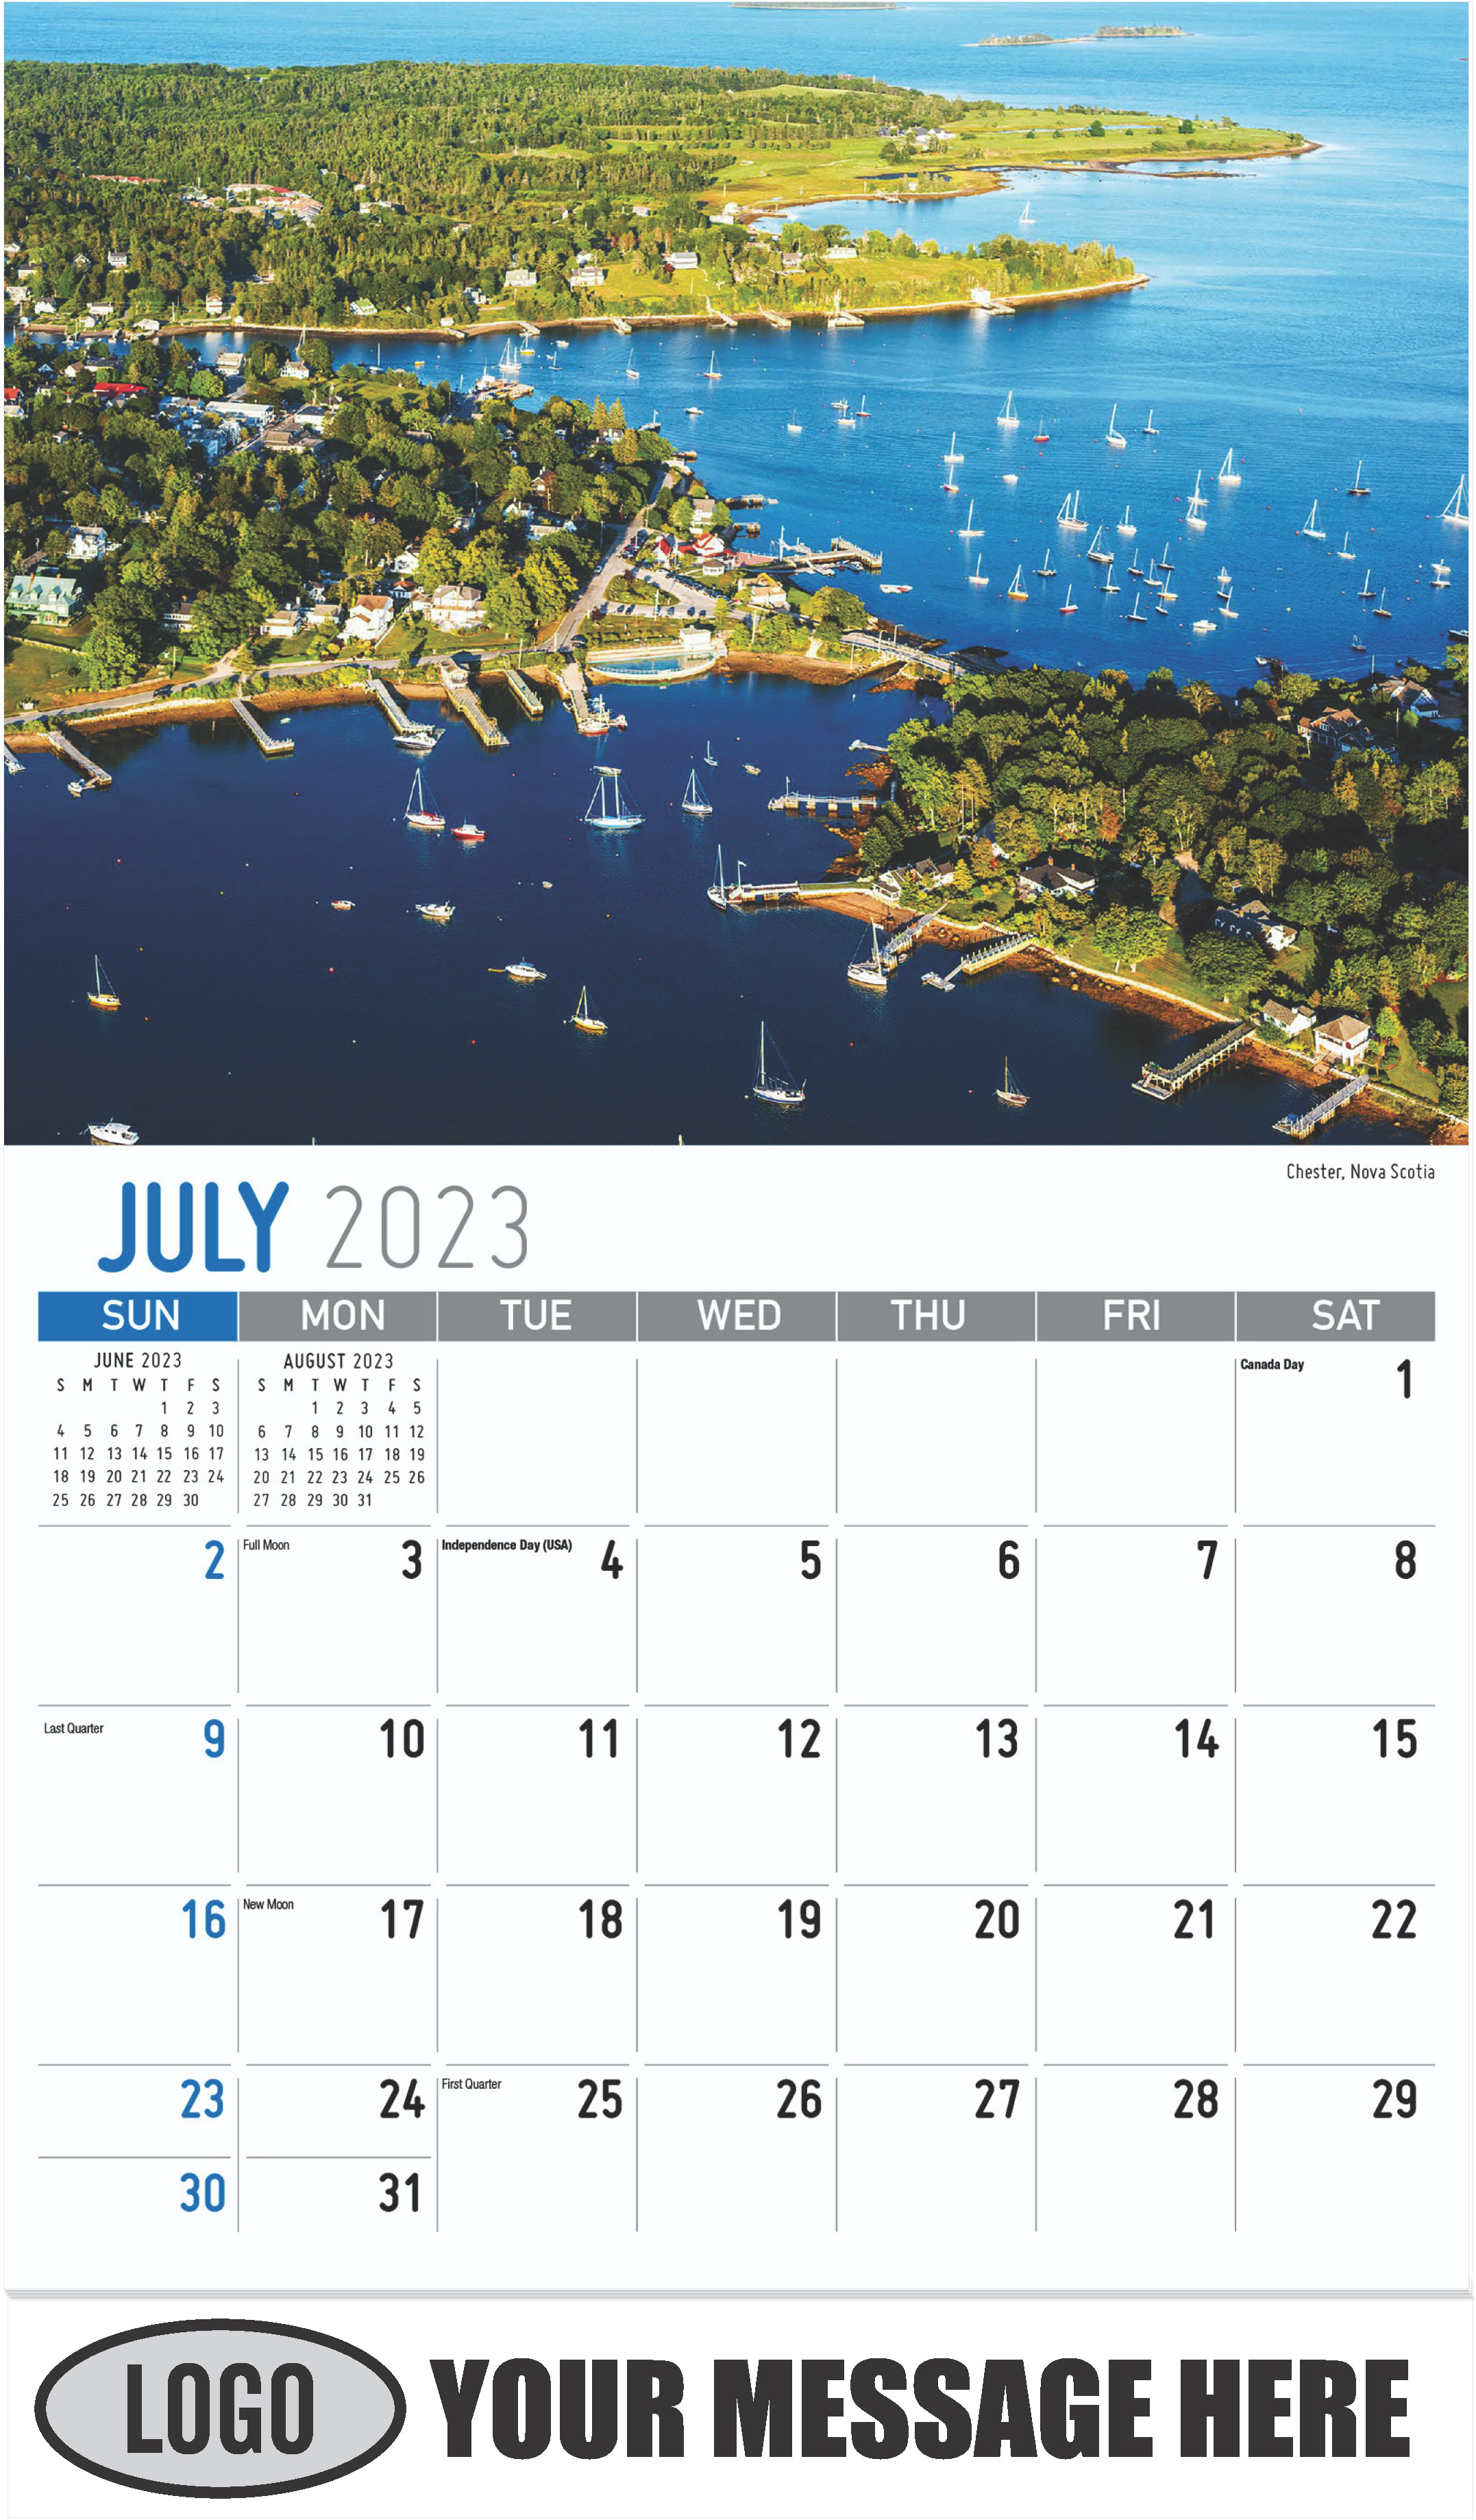 Chester, Nova Scotia - July - Atlantic Canada 2023 Promotional Calendar